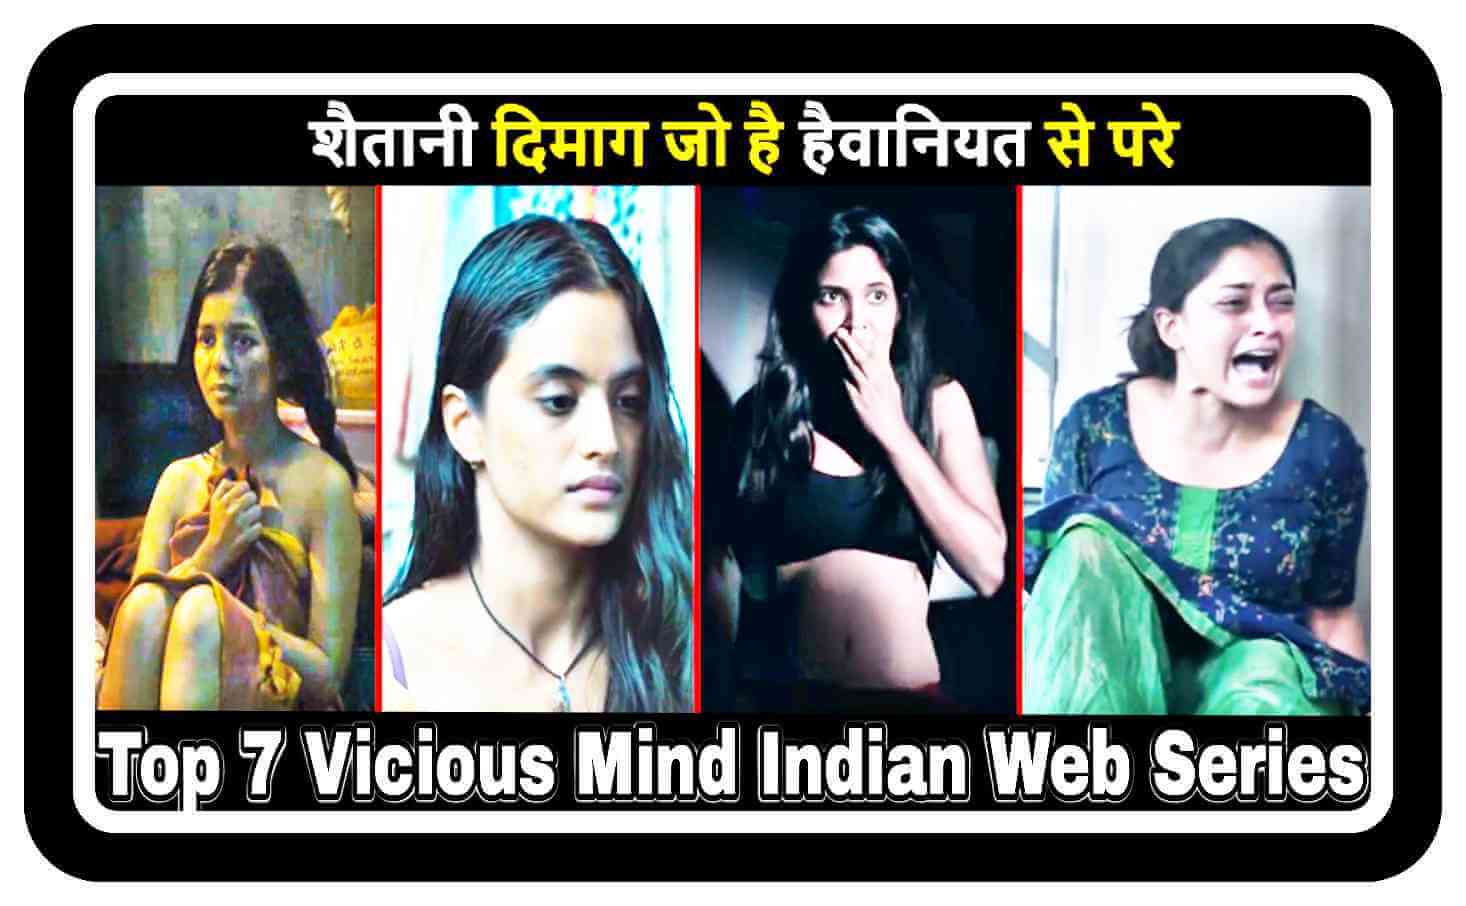 Top 7 Vicious Mind Indian Web Series